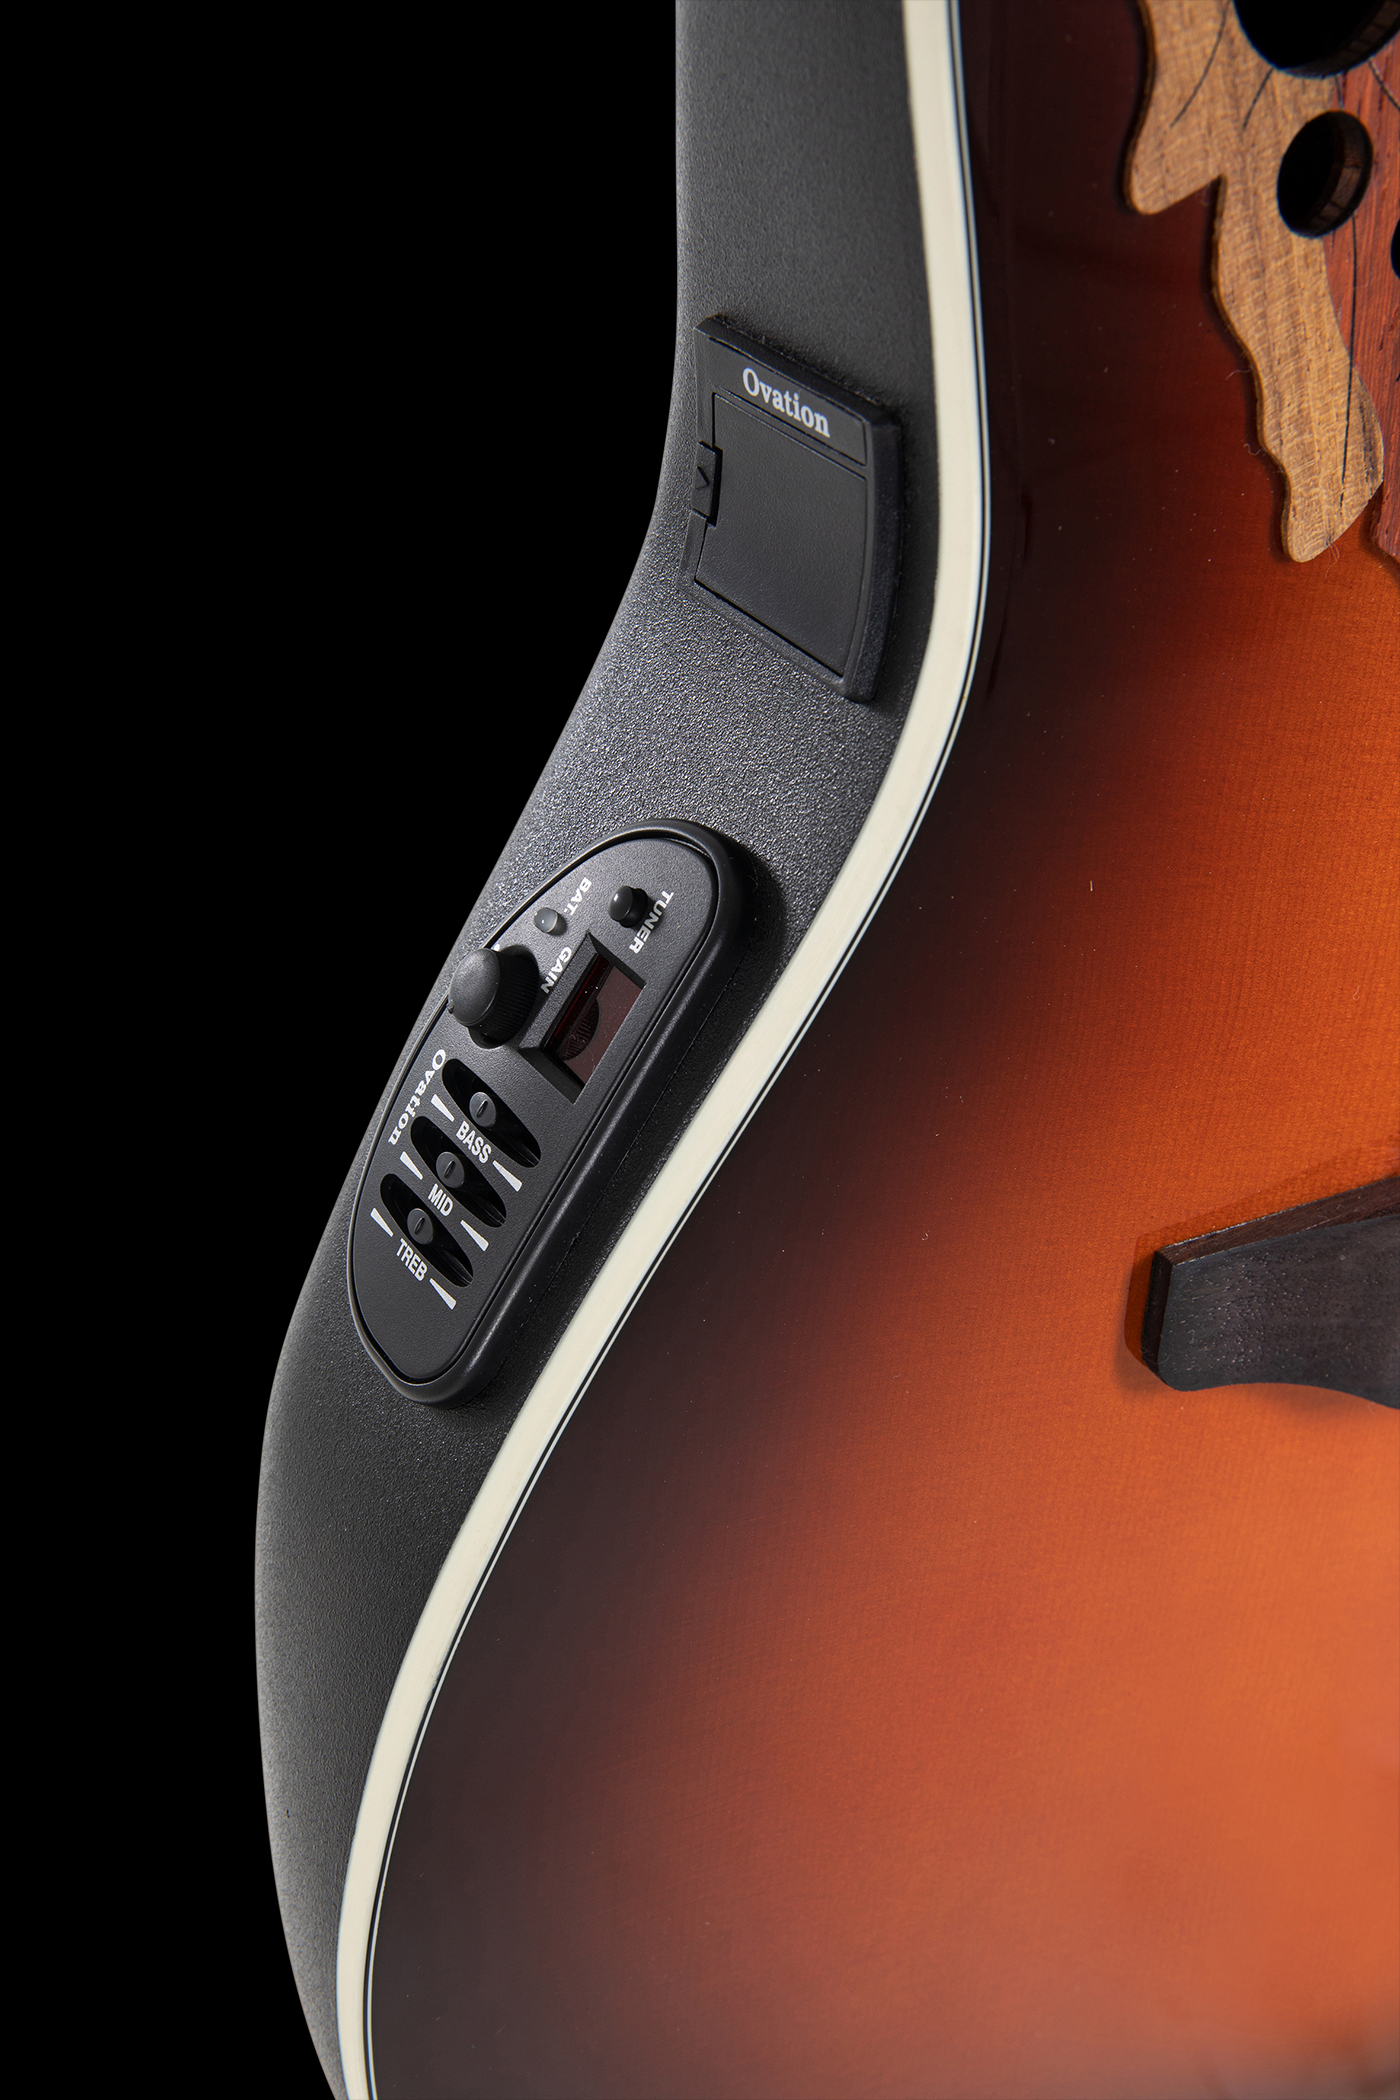 Ovation E-Acoustic Guitar Celebrity Elite Super Shallow Cutaway